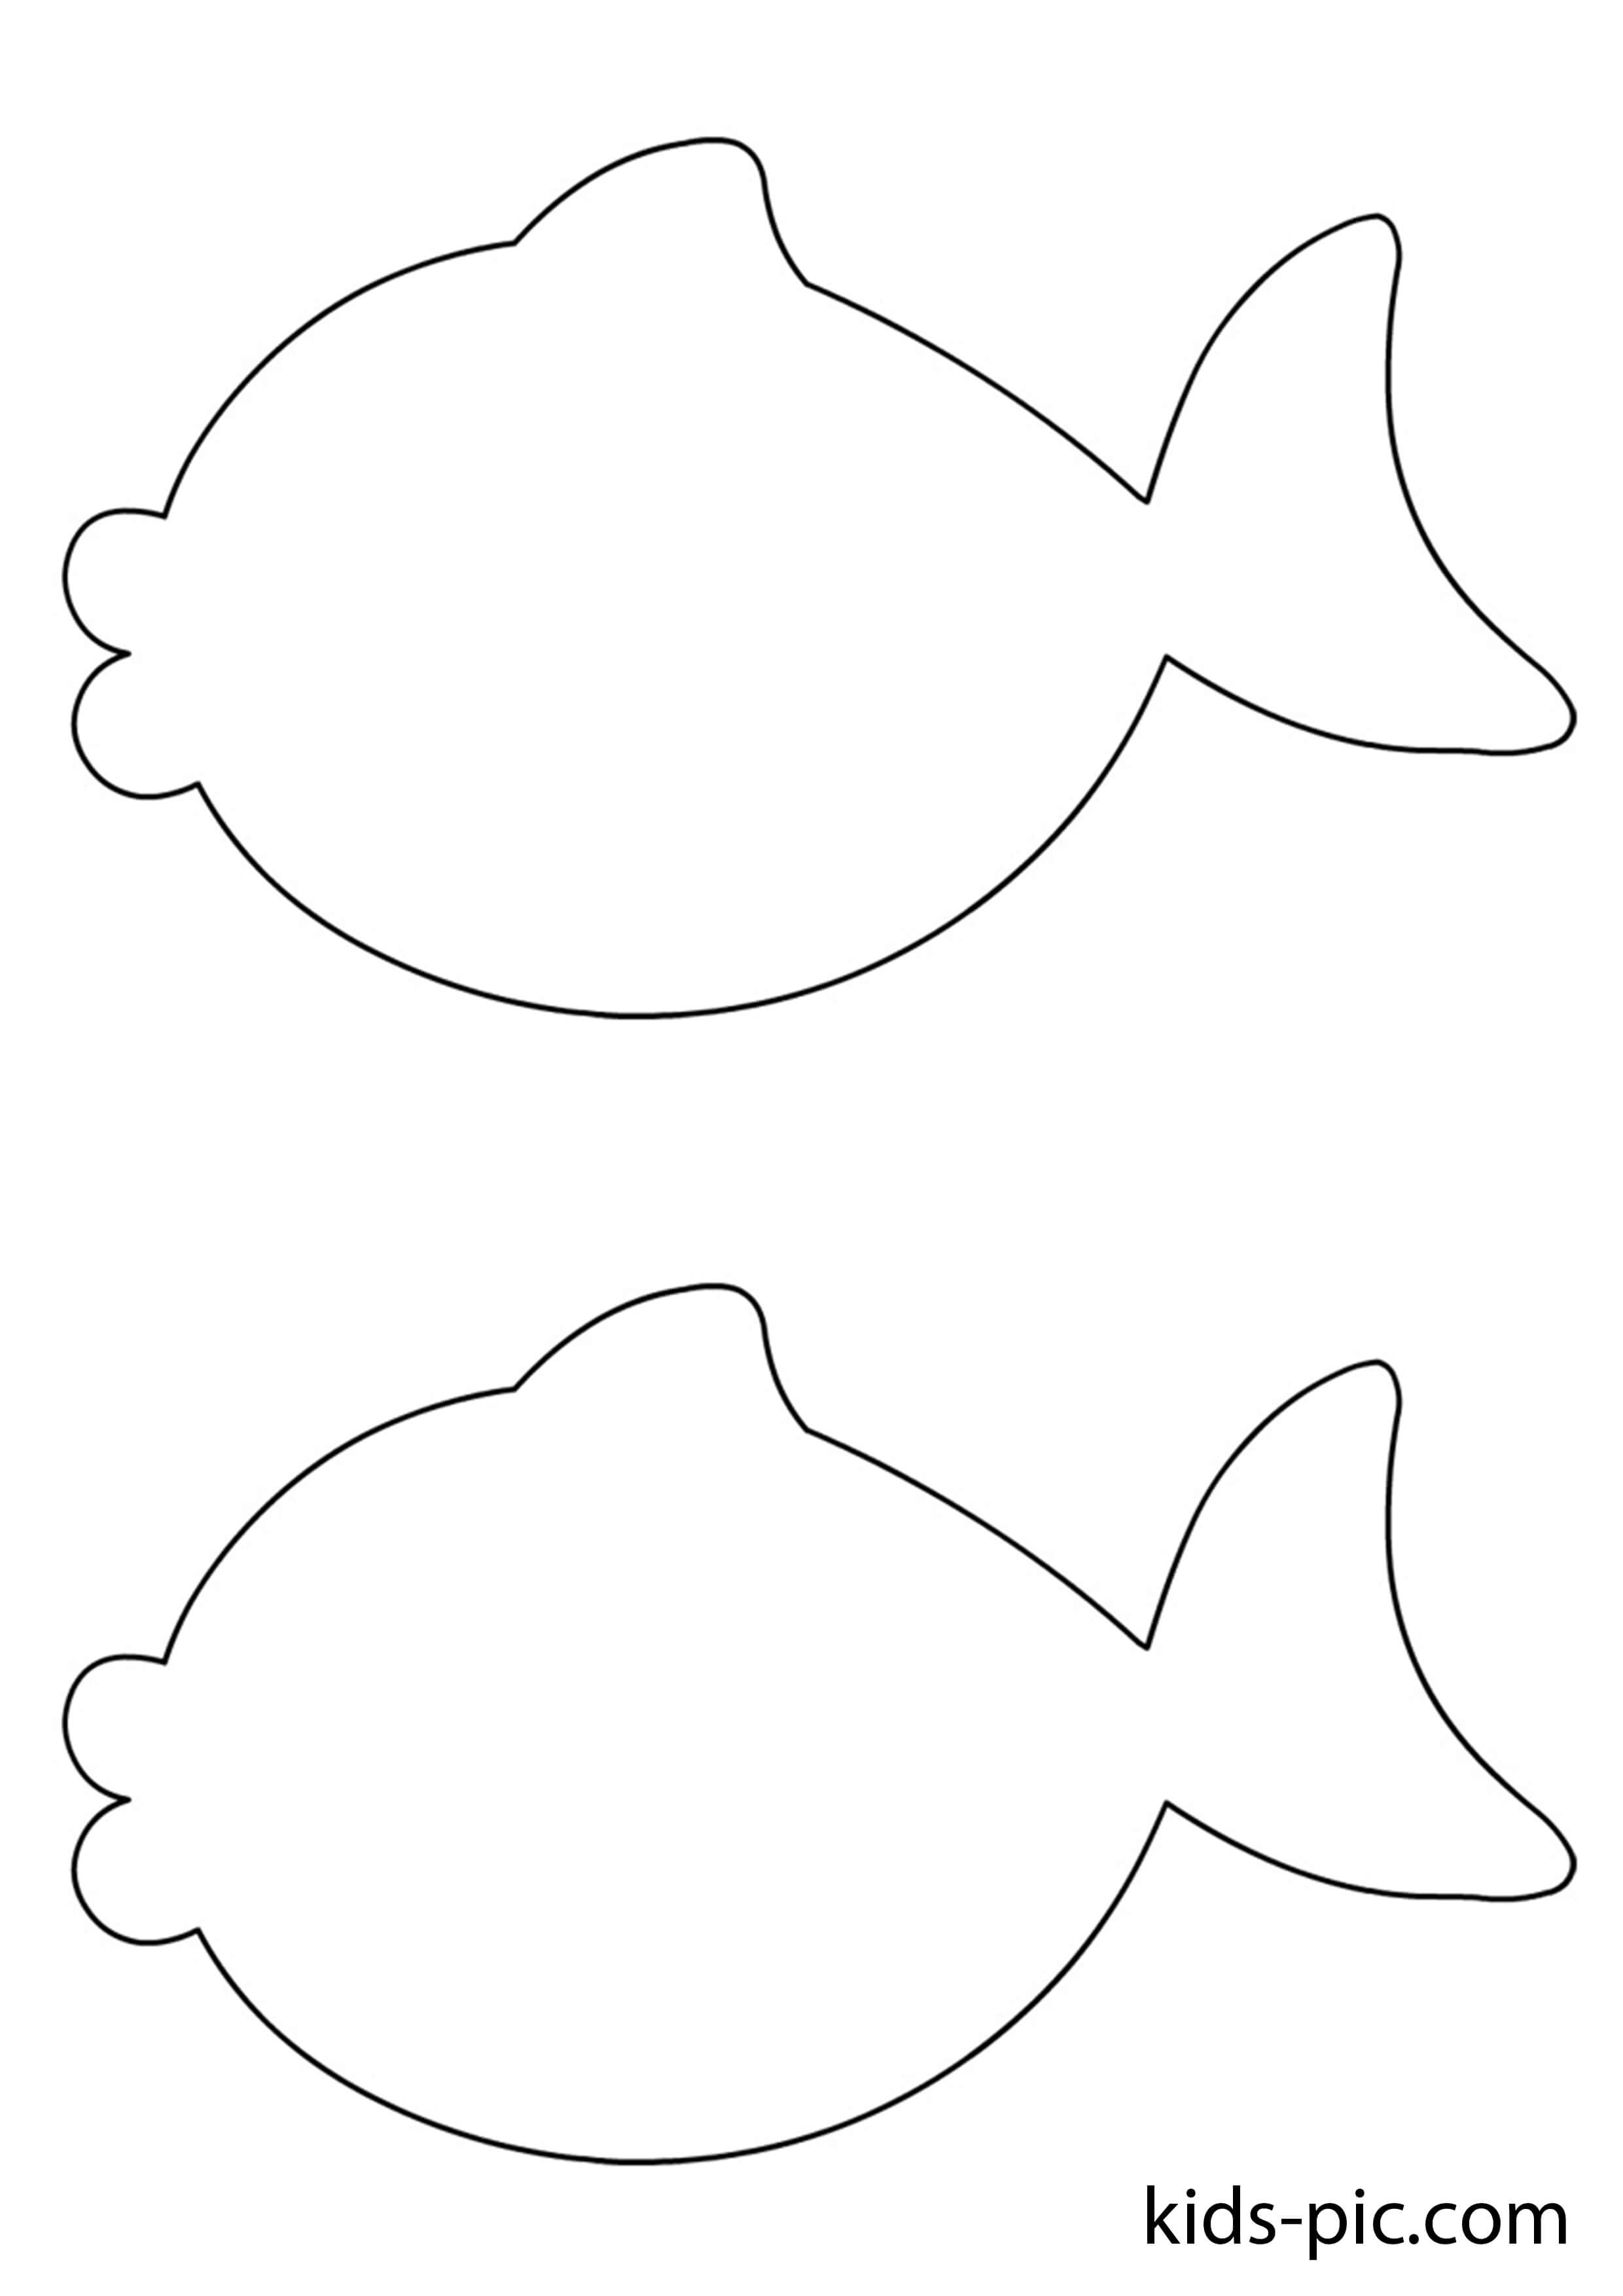 fish templates to print